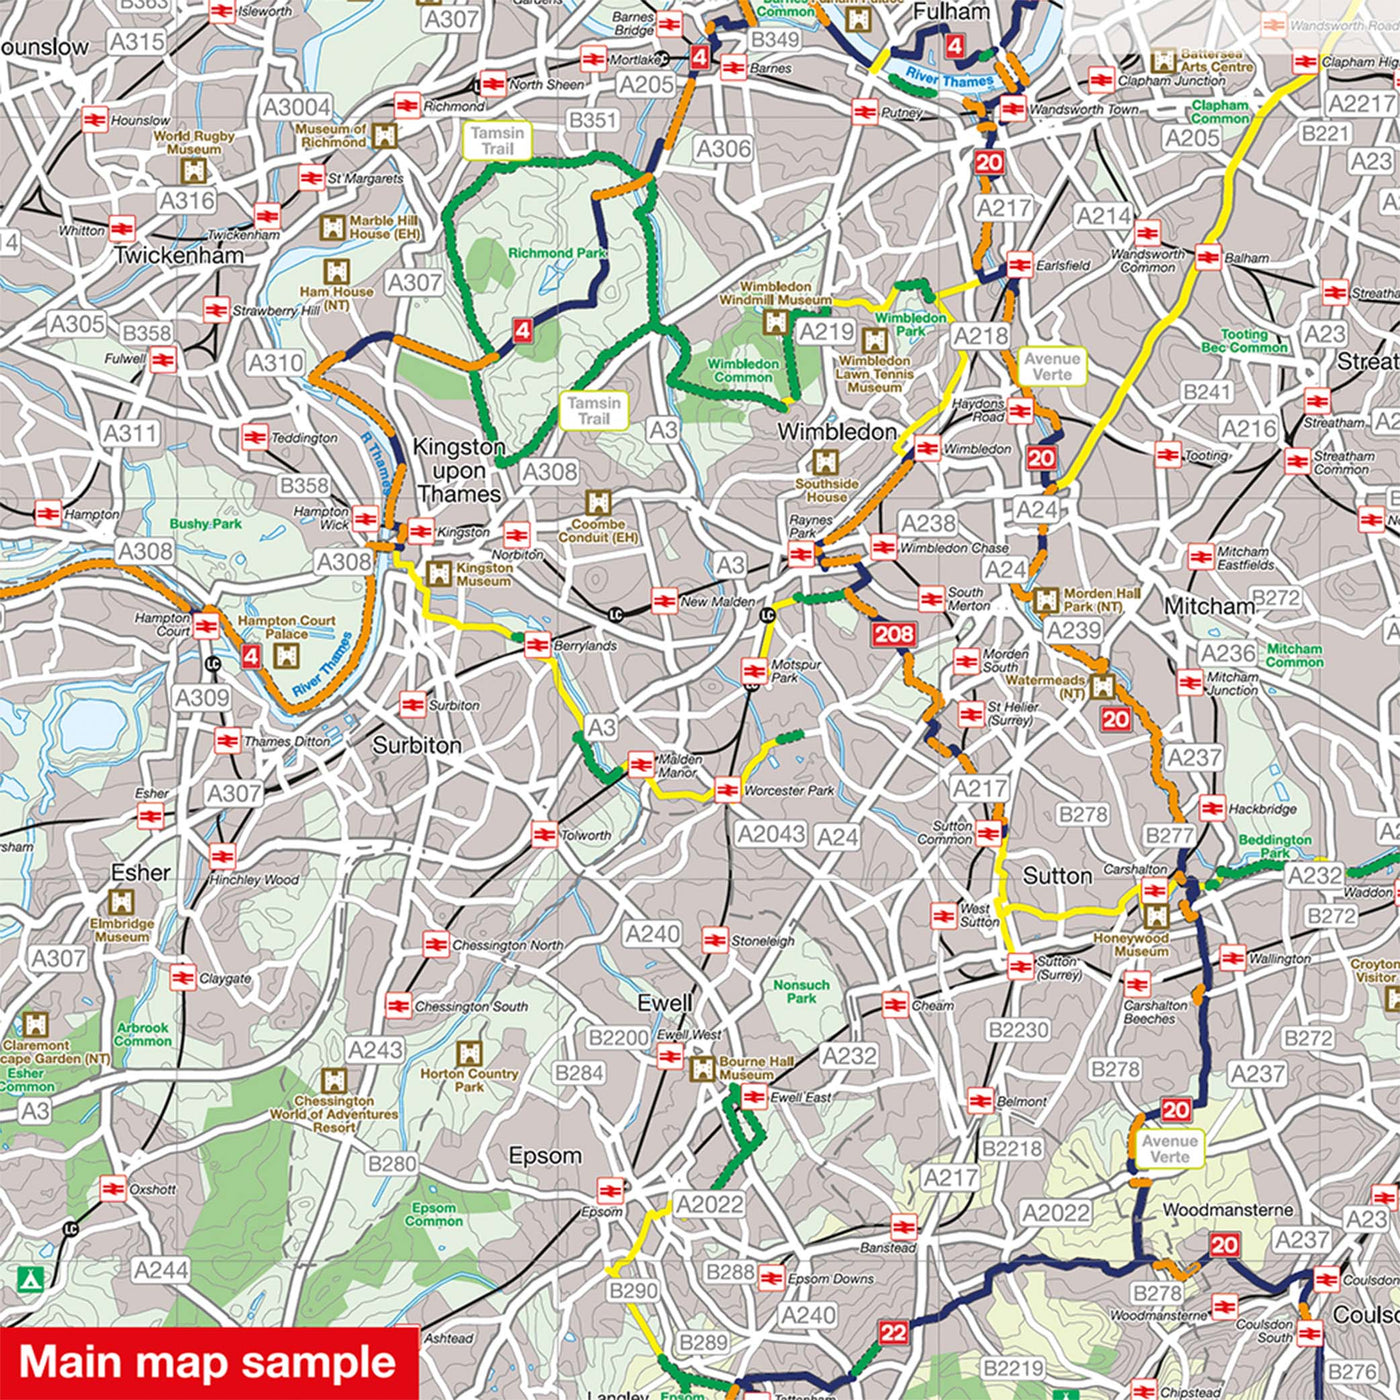 Main map sample of London cycle map